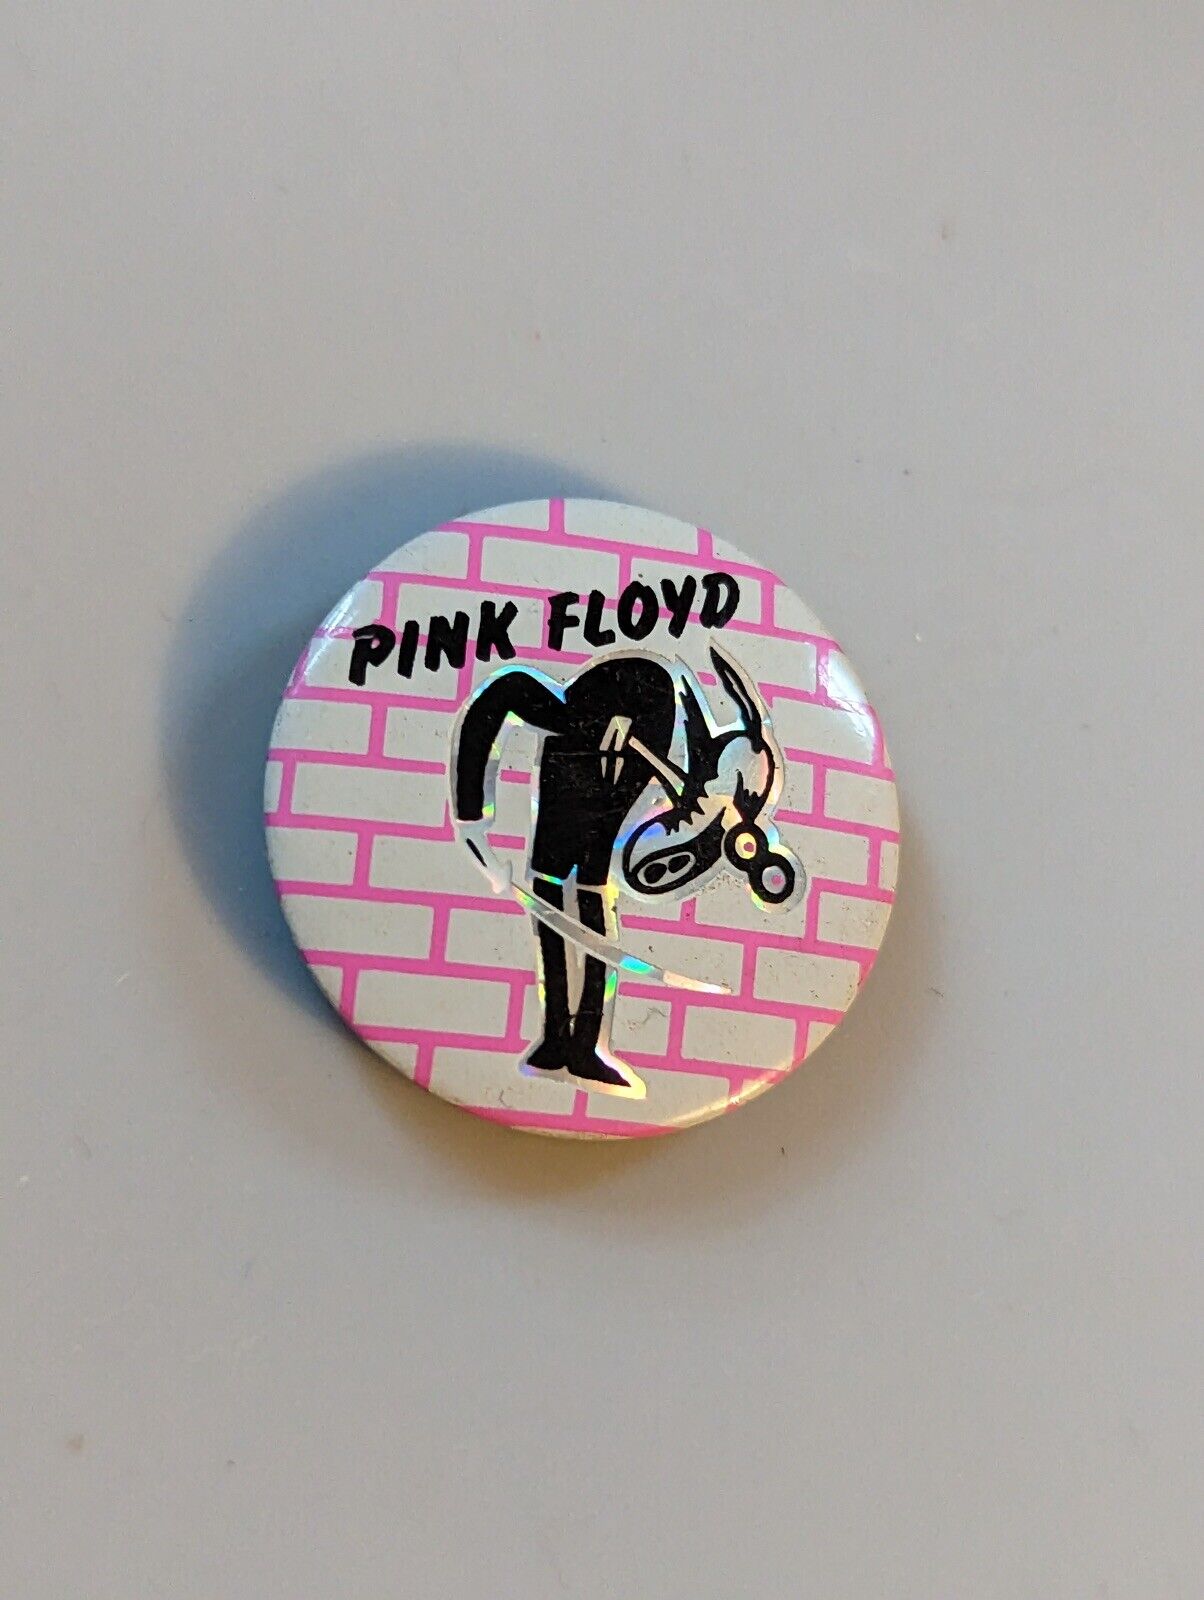 PINK FLOYD Pin Vintage 80s Original  band Pin Pinback Button Purchased 1986